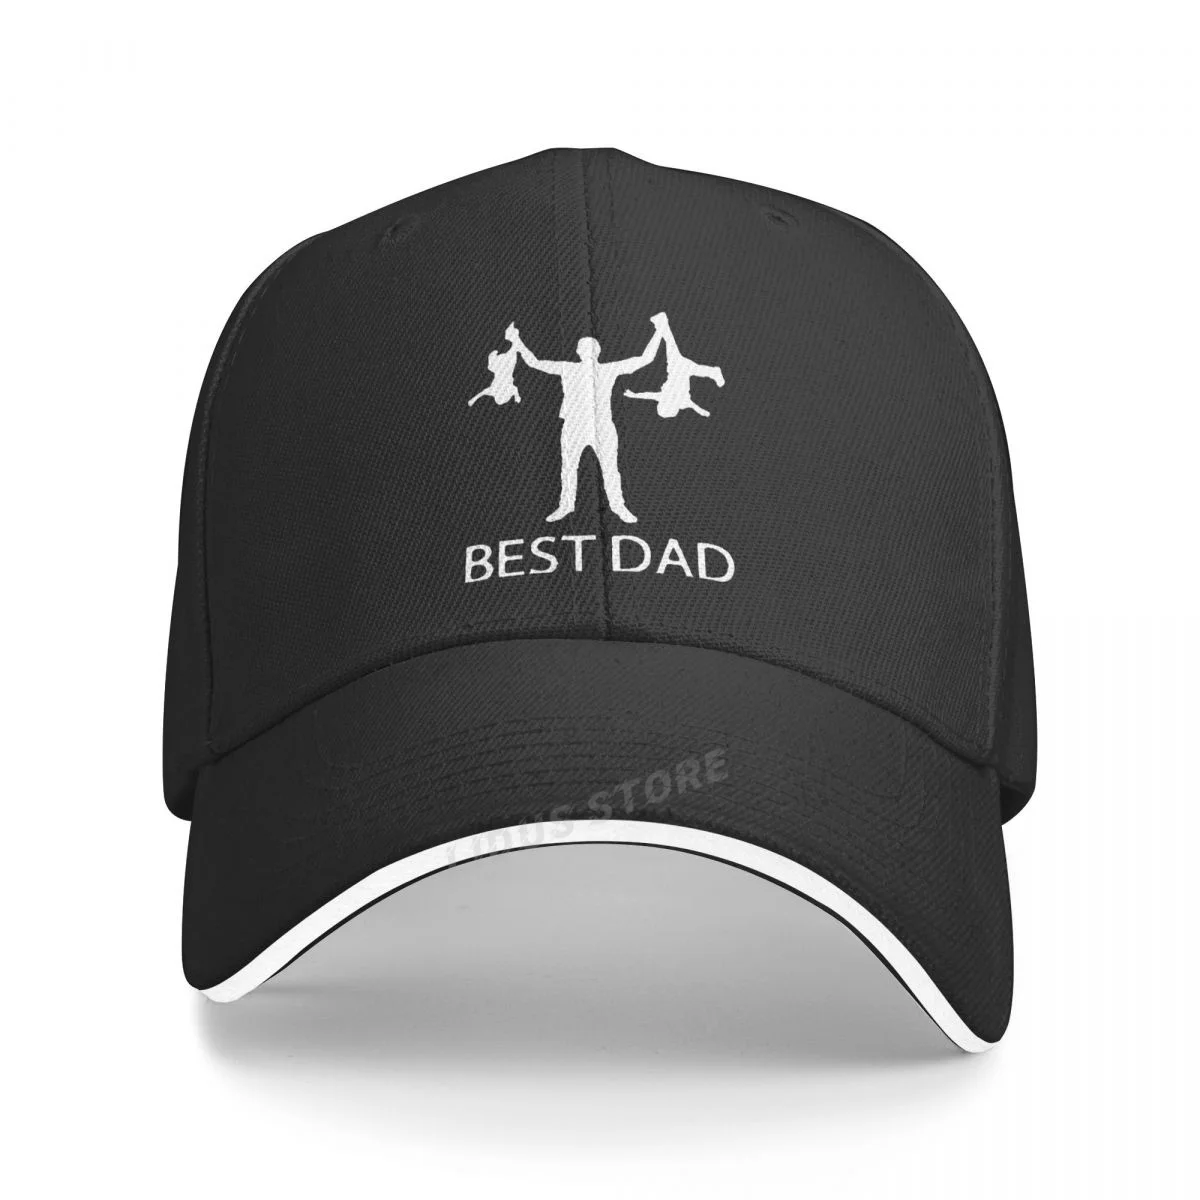 Best Dad Baseball Cap Funny Design Father Day Cap 100% Cotton Fashion Good Dad Summer Adjustable Snapback Hat Bone